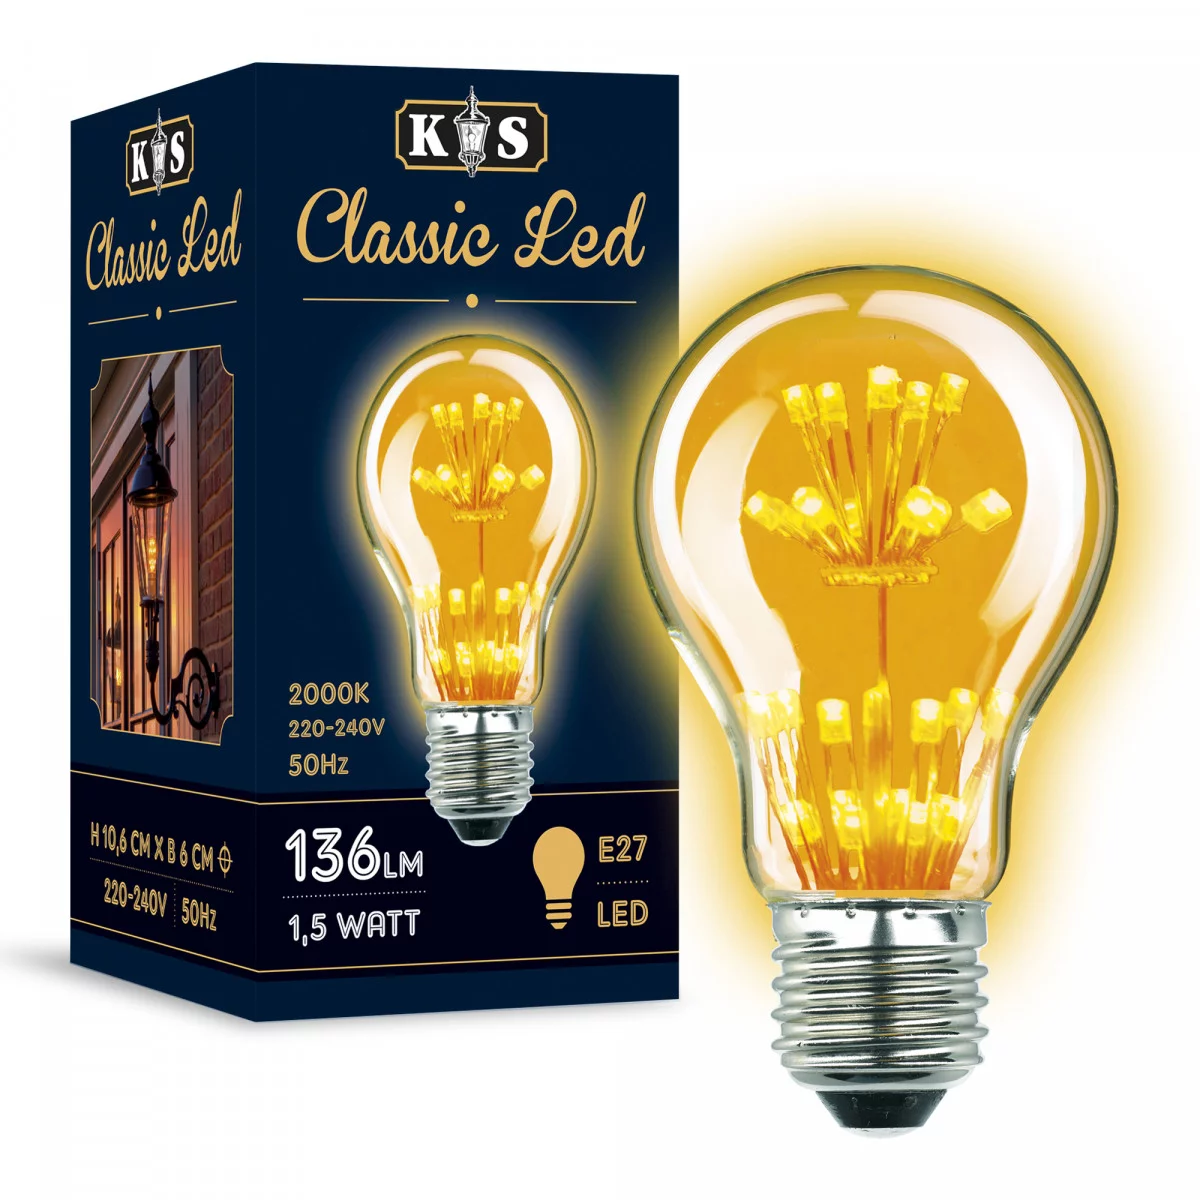 Lamp Classic Led 1,5 | Officiële site Verlichting